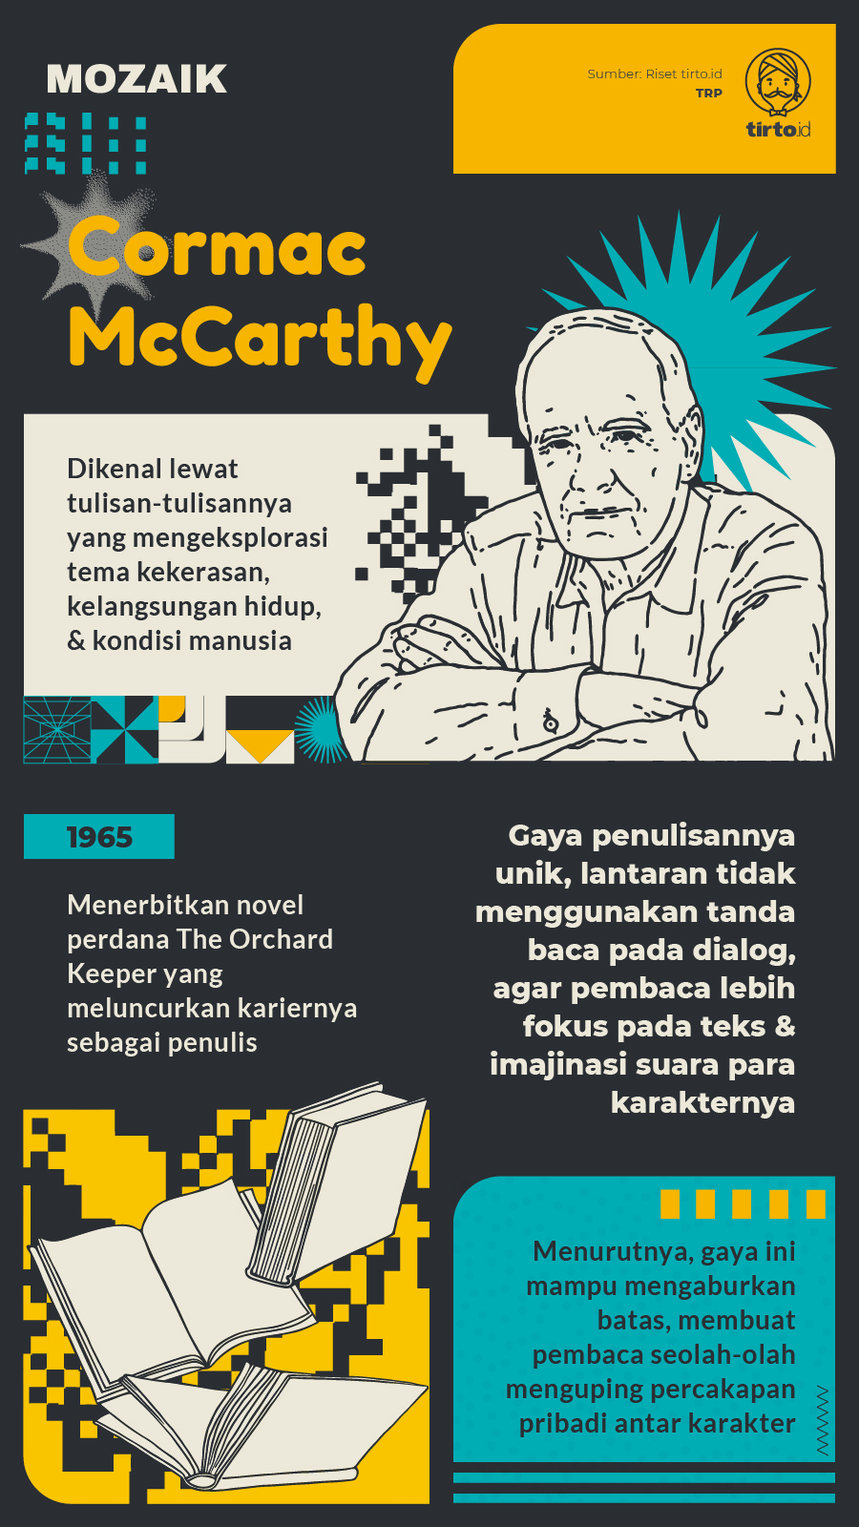 Infografik Mozaik Cormac McCarthy